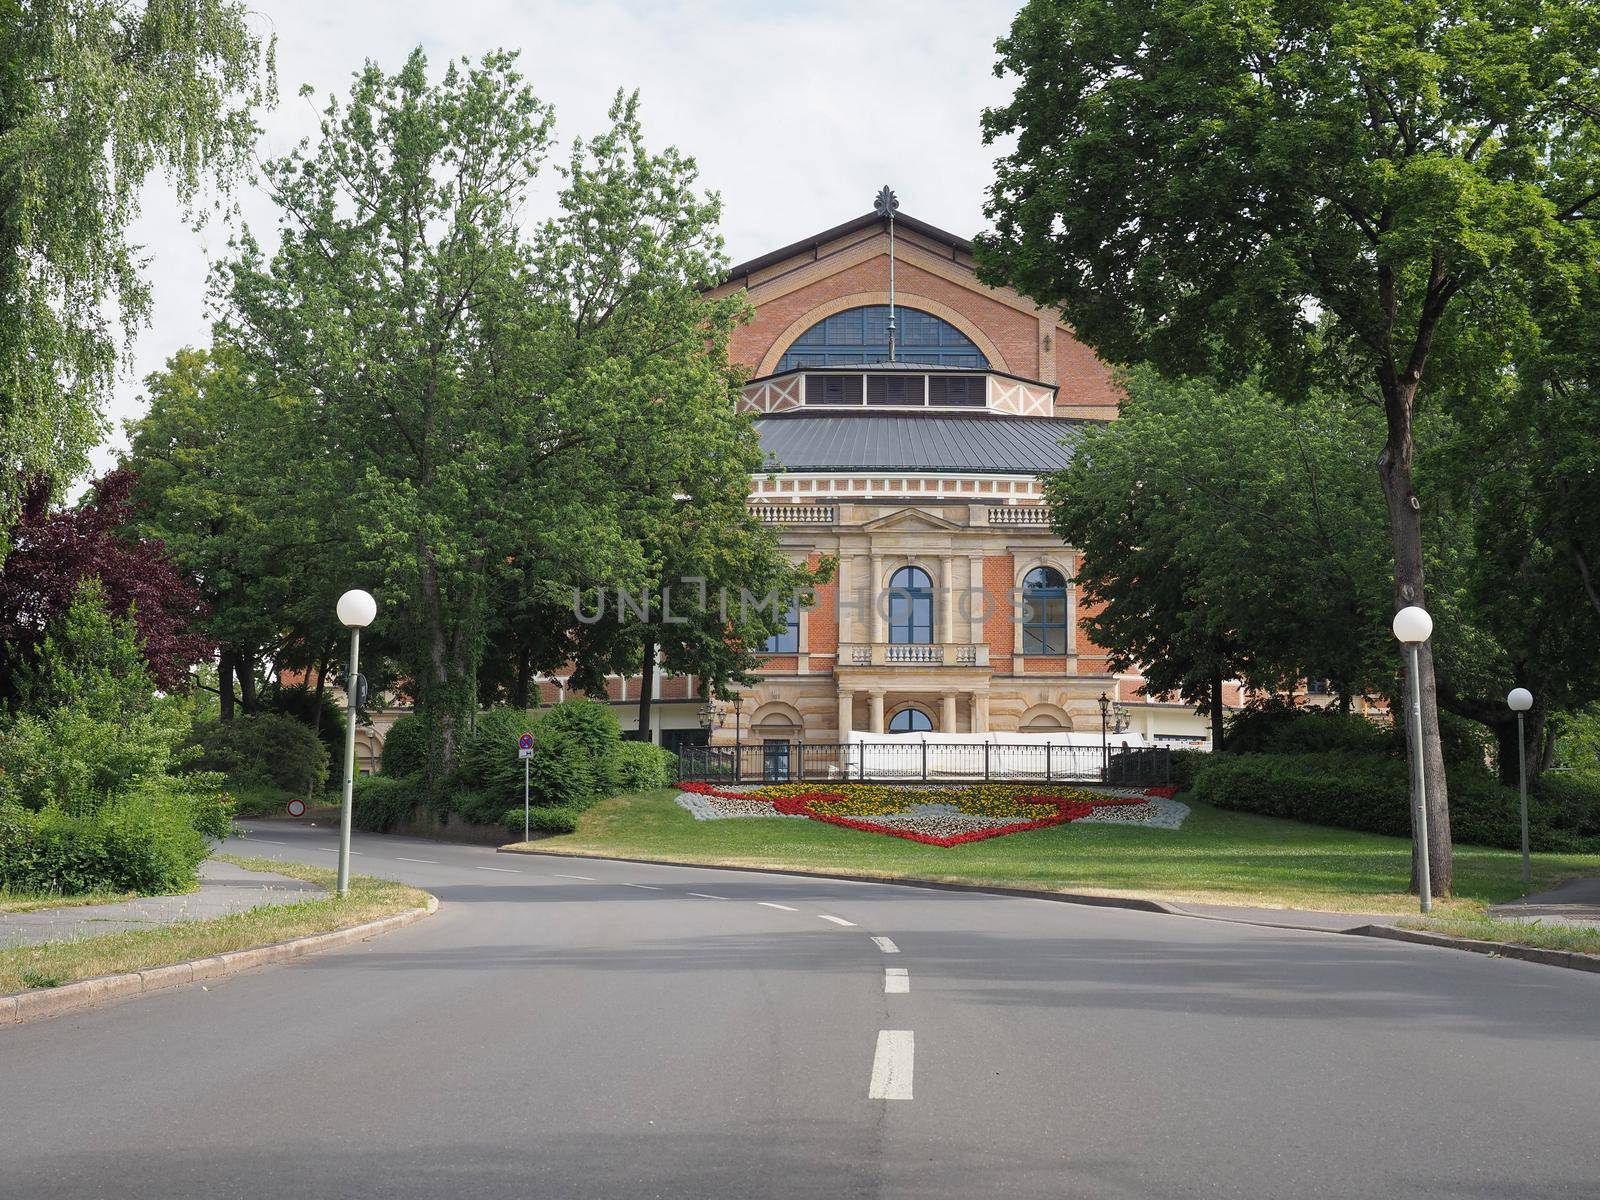 Festspielhaus Festival Theatre in Bayreuth by claudiodivizia